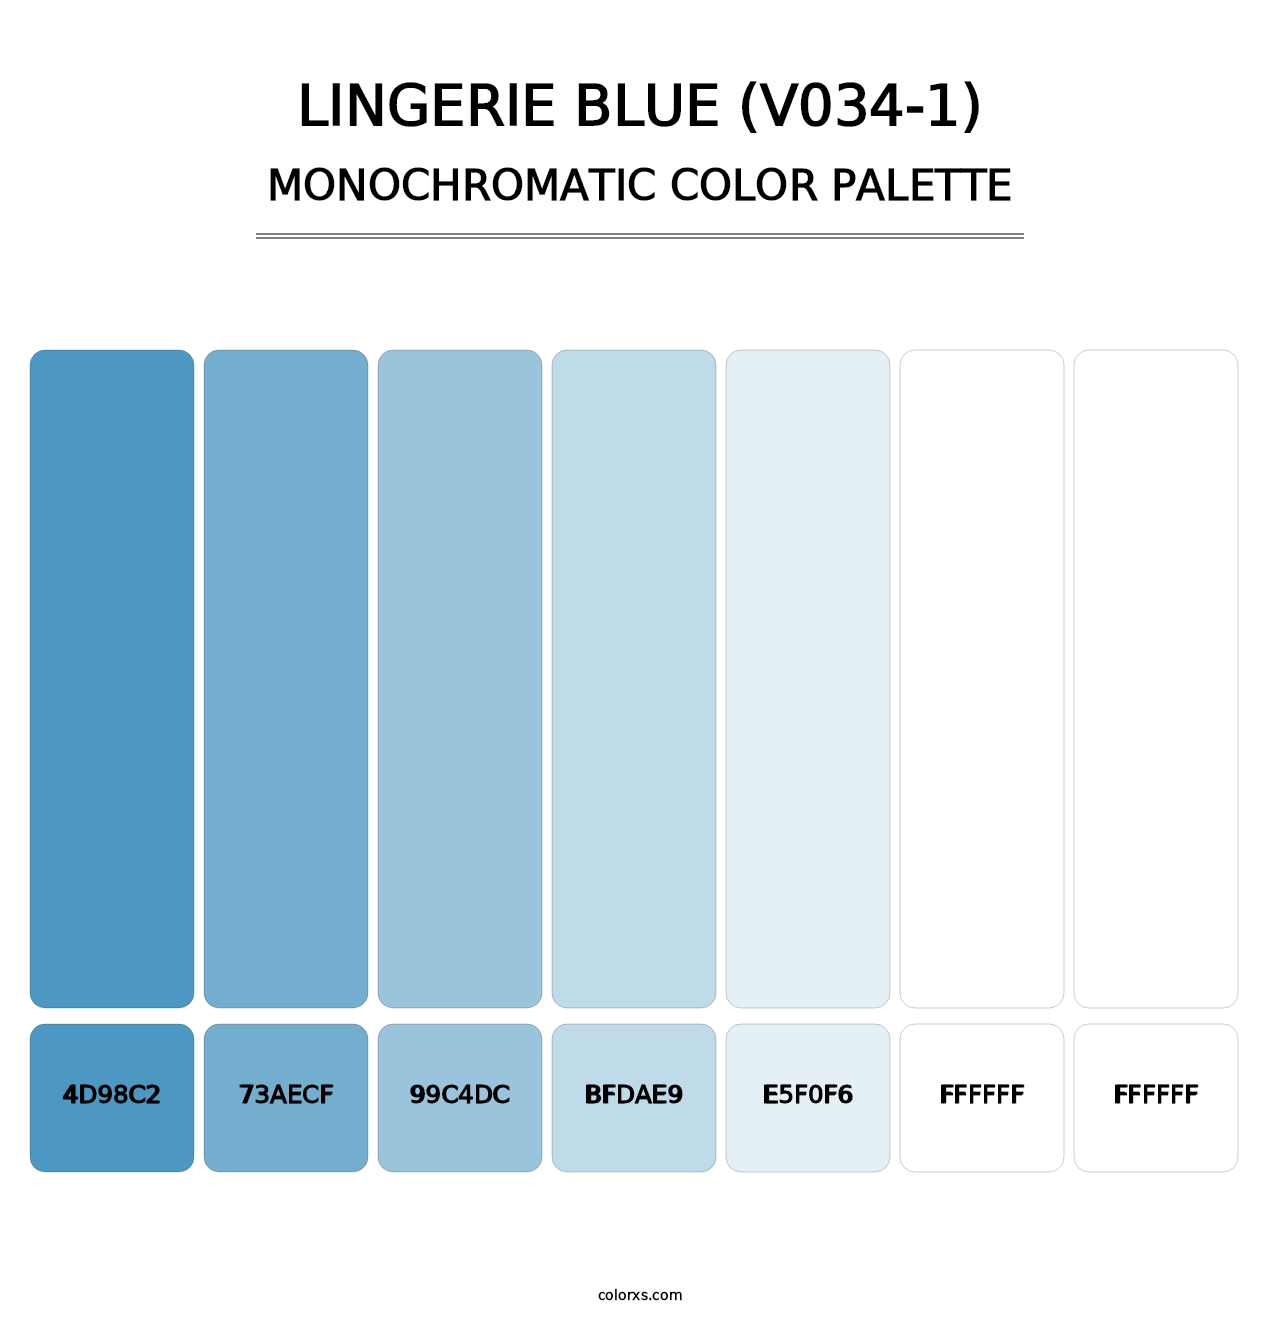 Lingerie Blue (V034-1) - Monochromatic Color Palette